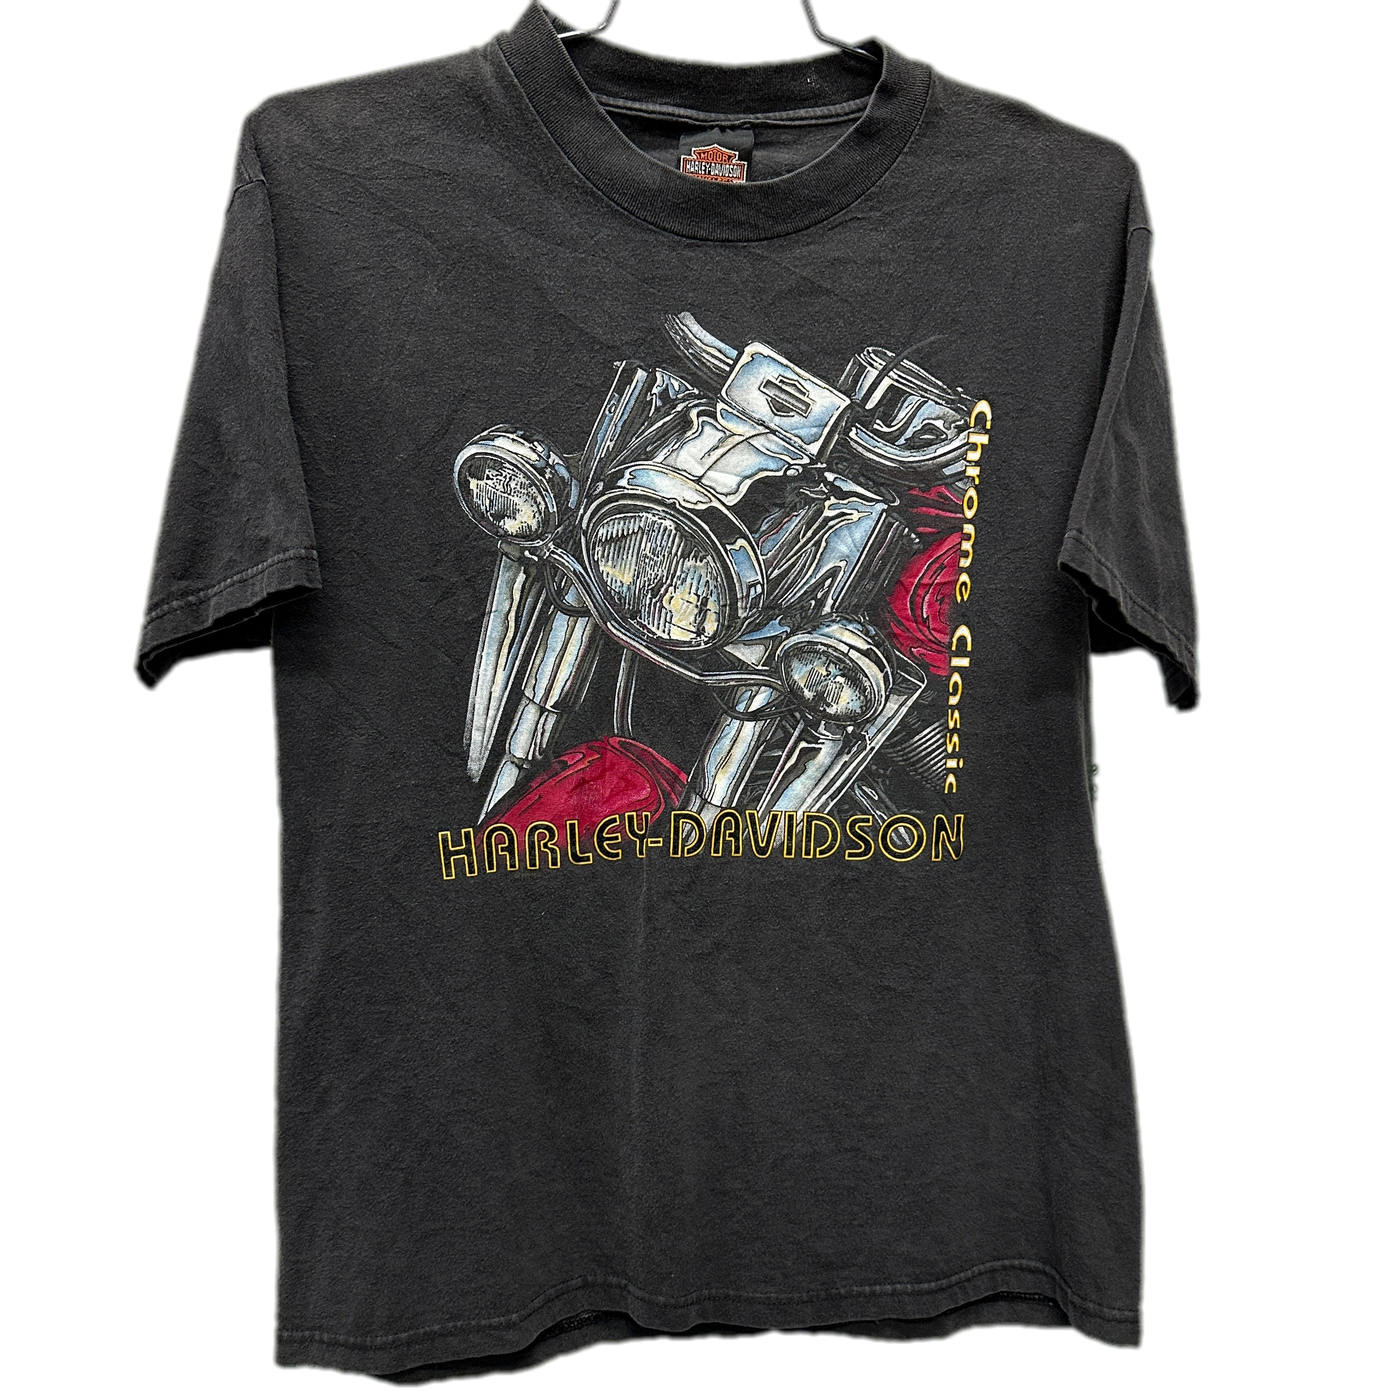 '99 Chrome Classic Black Harley Davidson T-shirt sz L